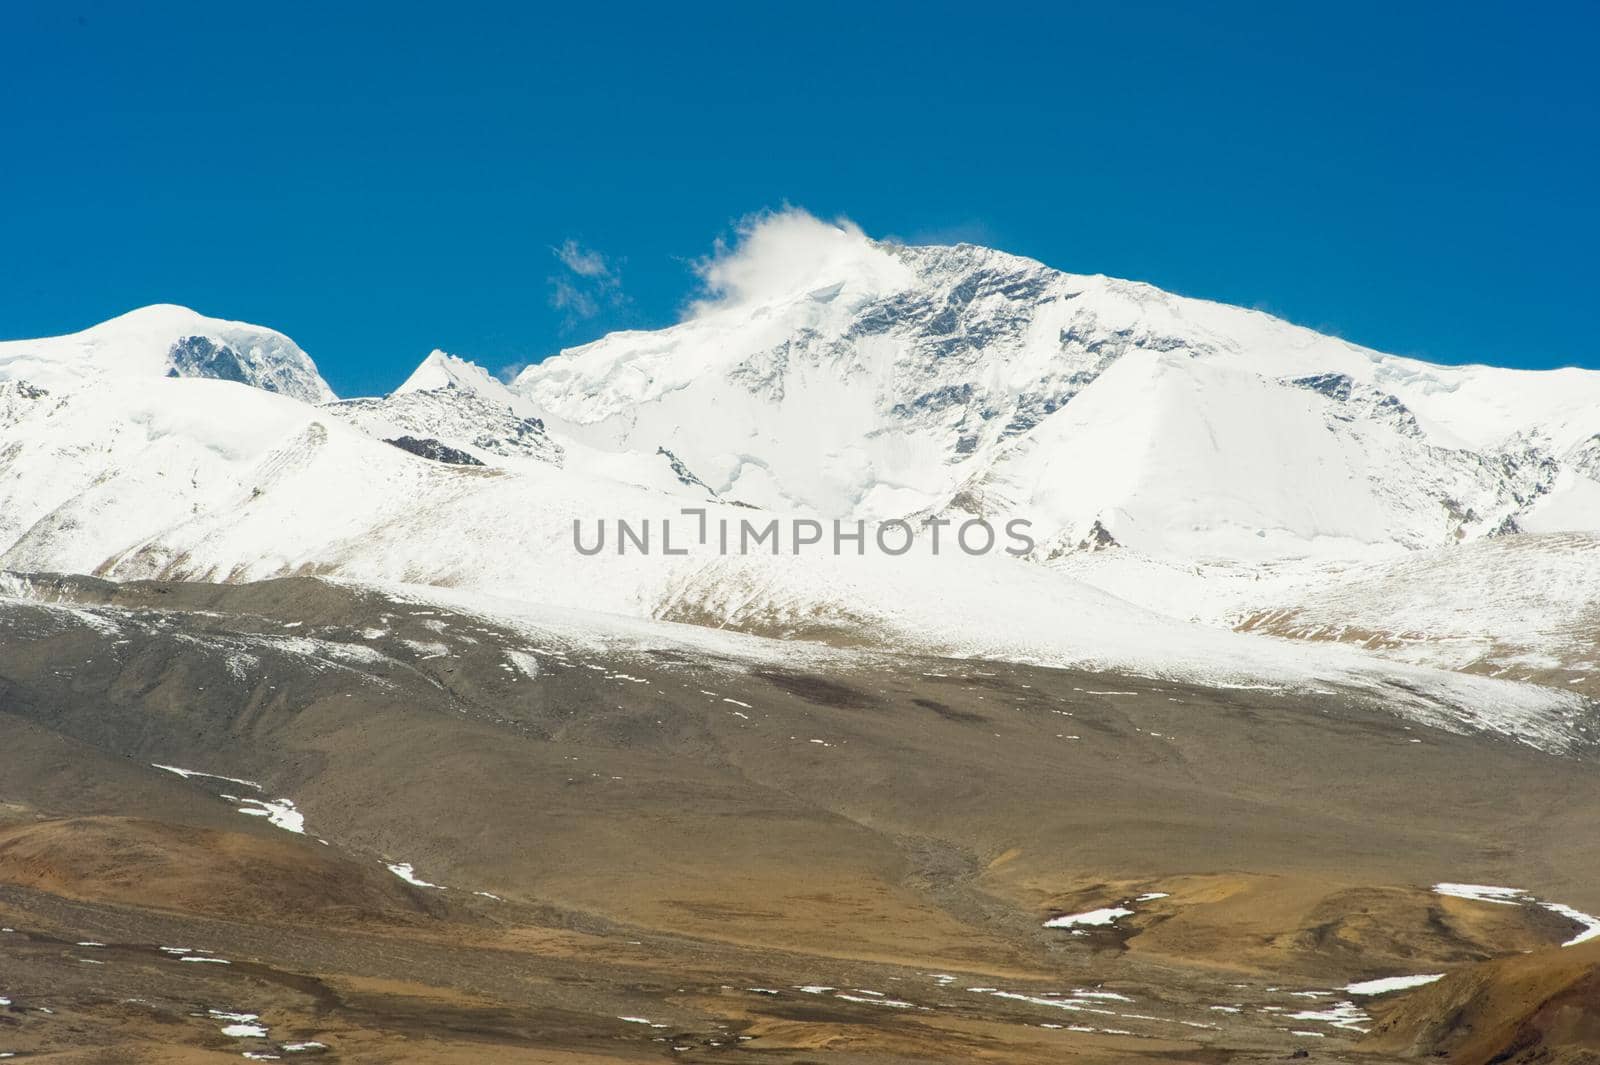 Mountains of the Himalayas, young beautiful high mountains of Tibet.